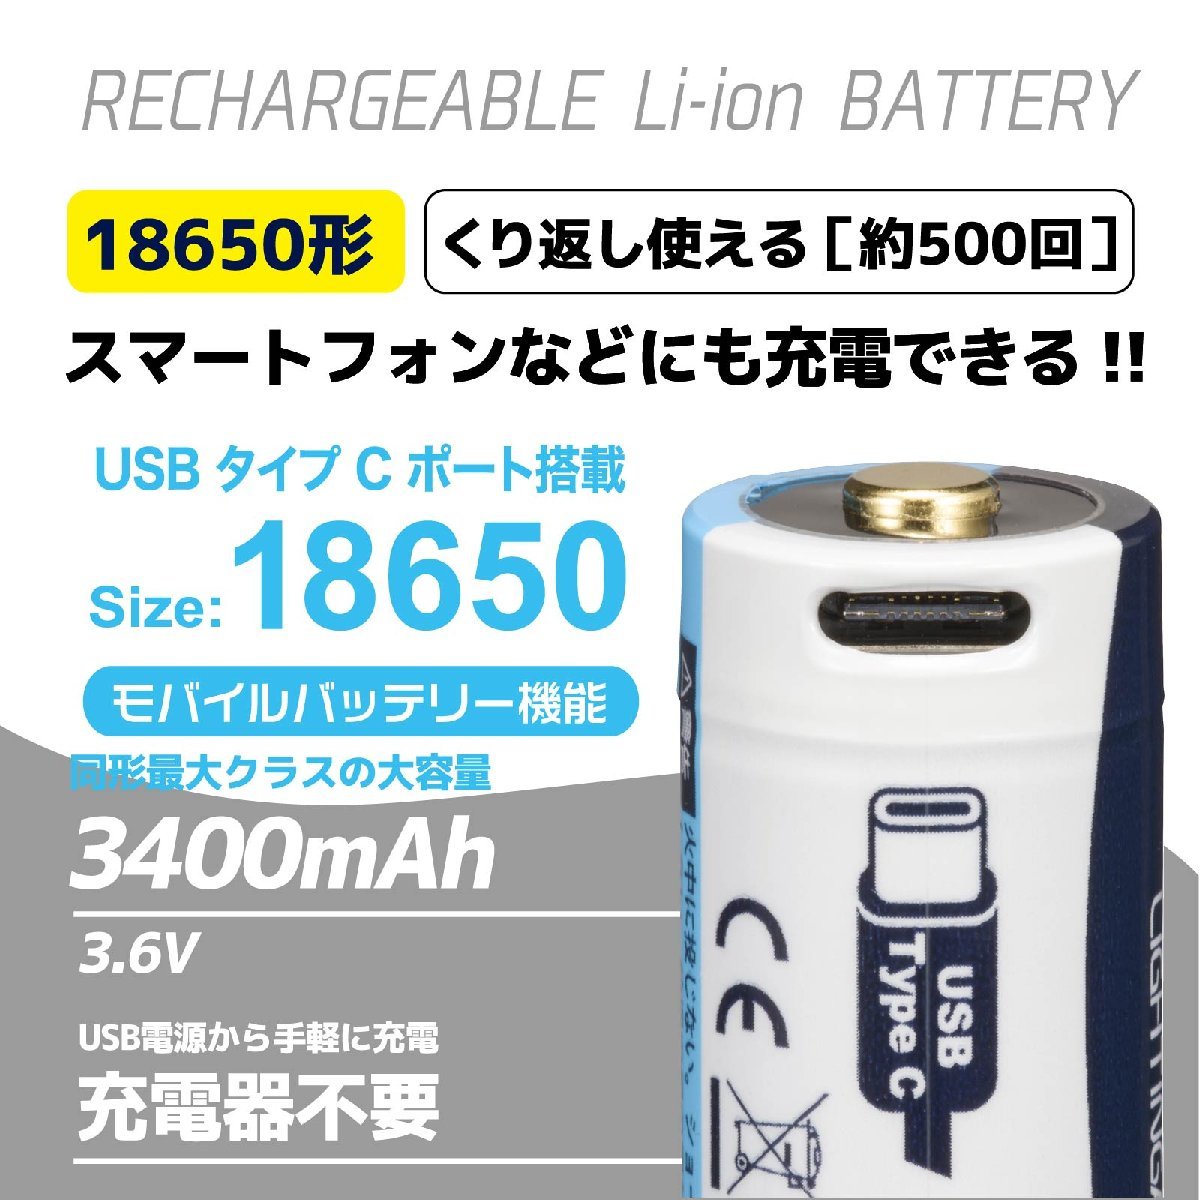  lithium ион батарейка USB заряжающийся lithium ион батарейка 18650 форма 3400mAhlBTJ-1865034-LIT 08-1313 ом электро- машина 